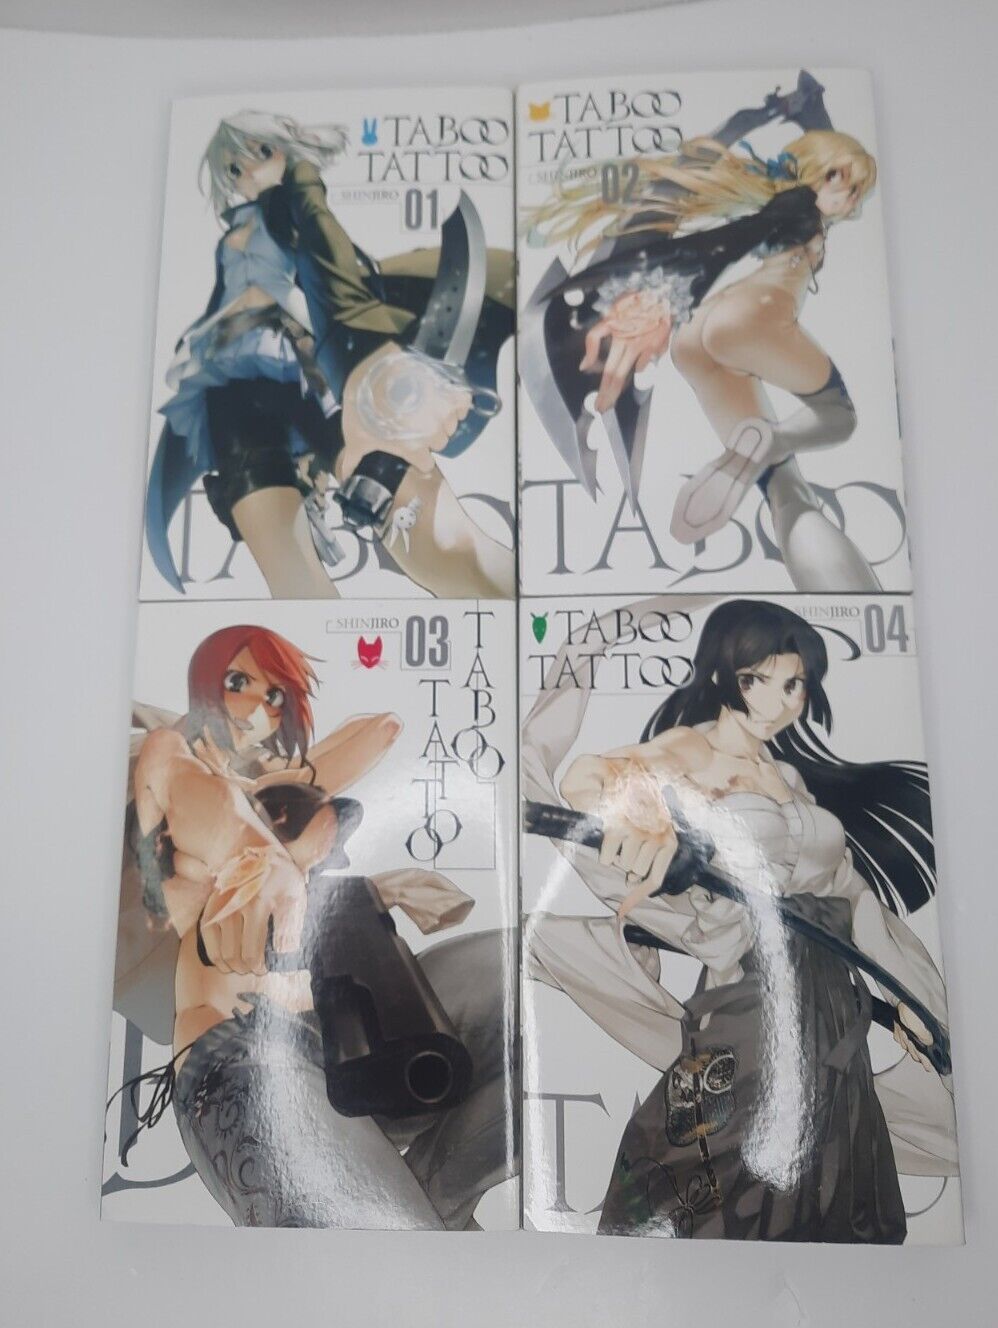 Taboo Tattoo Volumes 1 2 3 4 Shinjiro Manga English